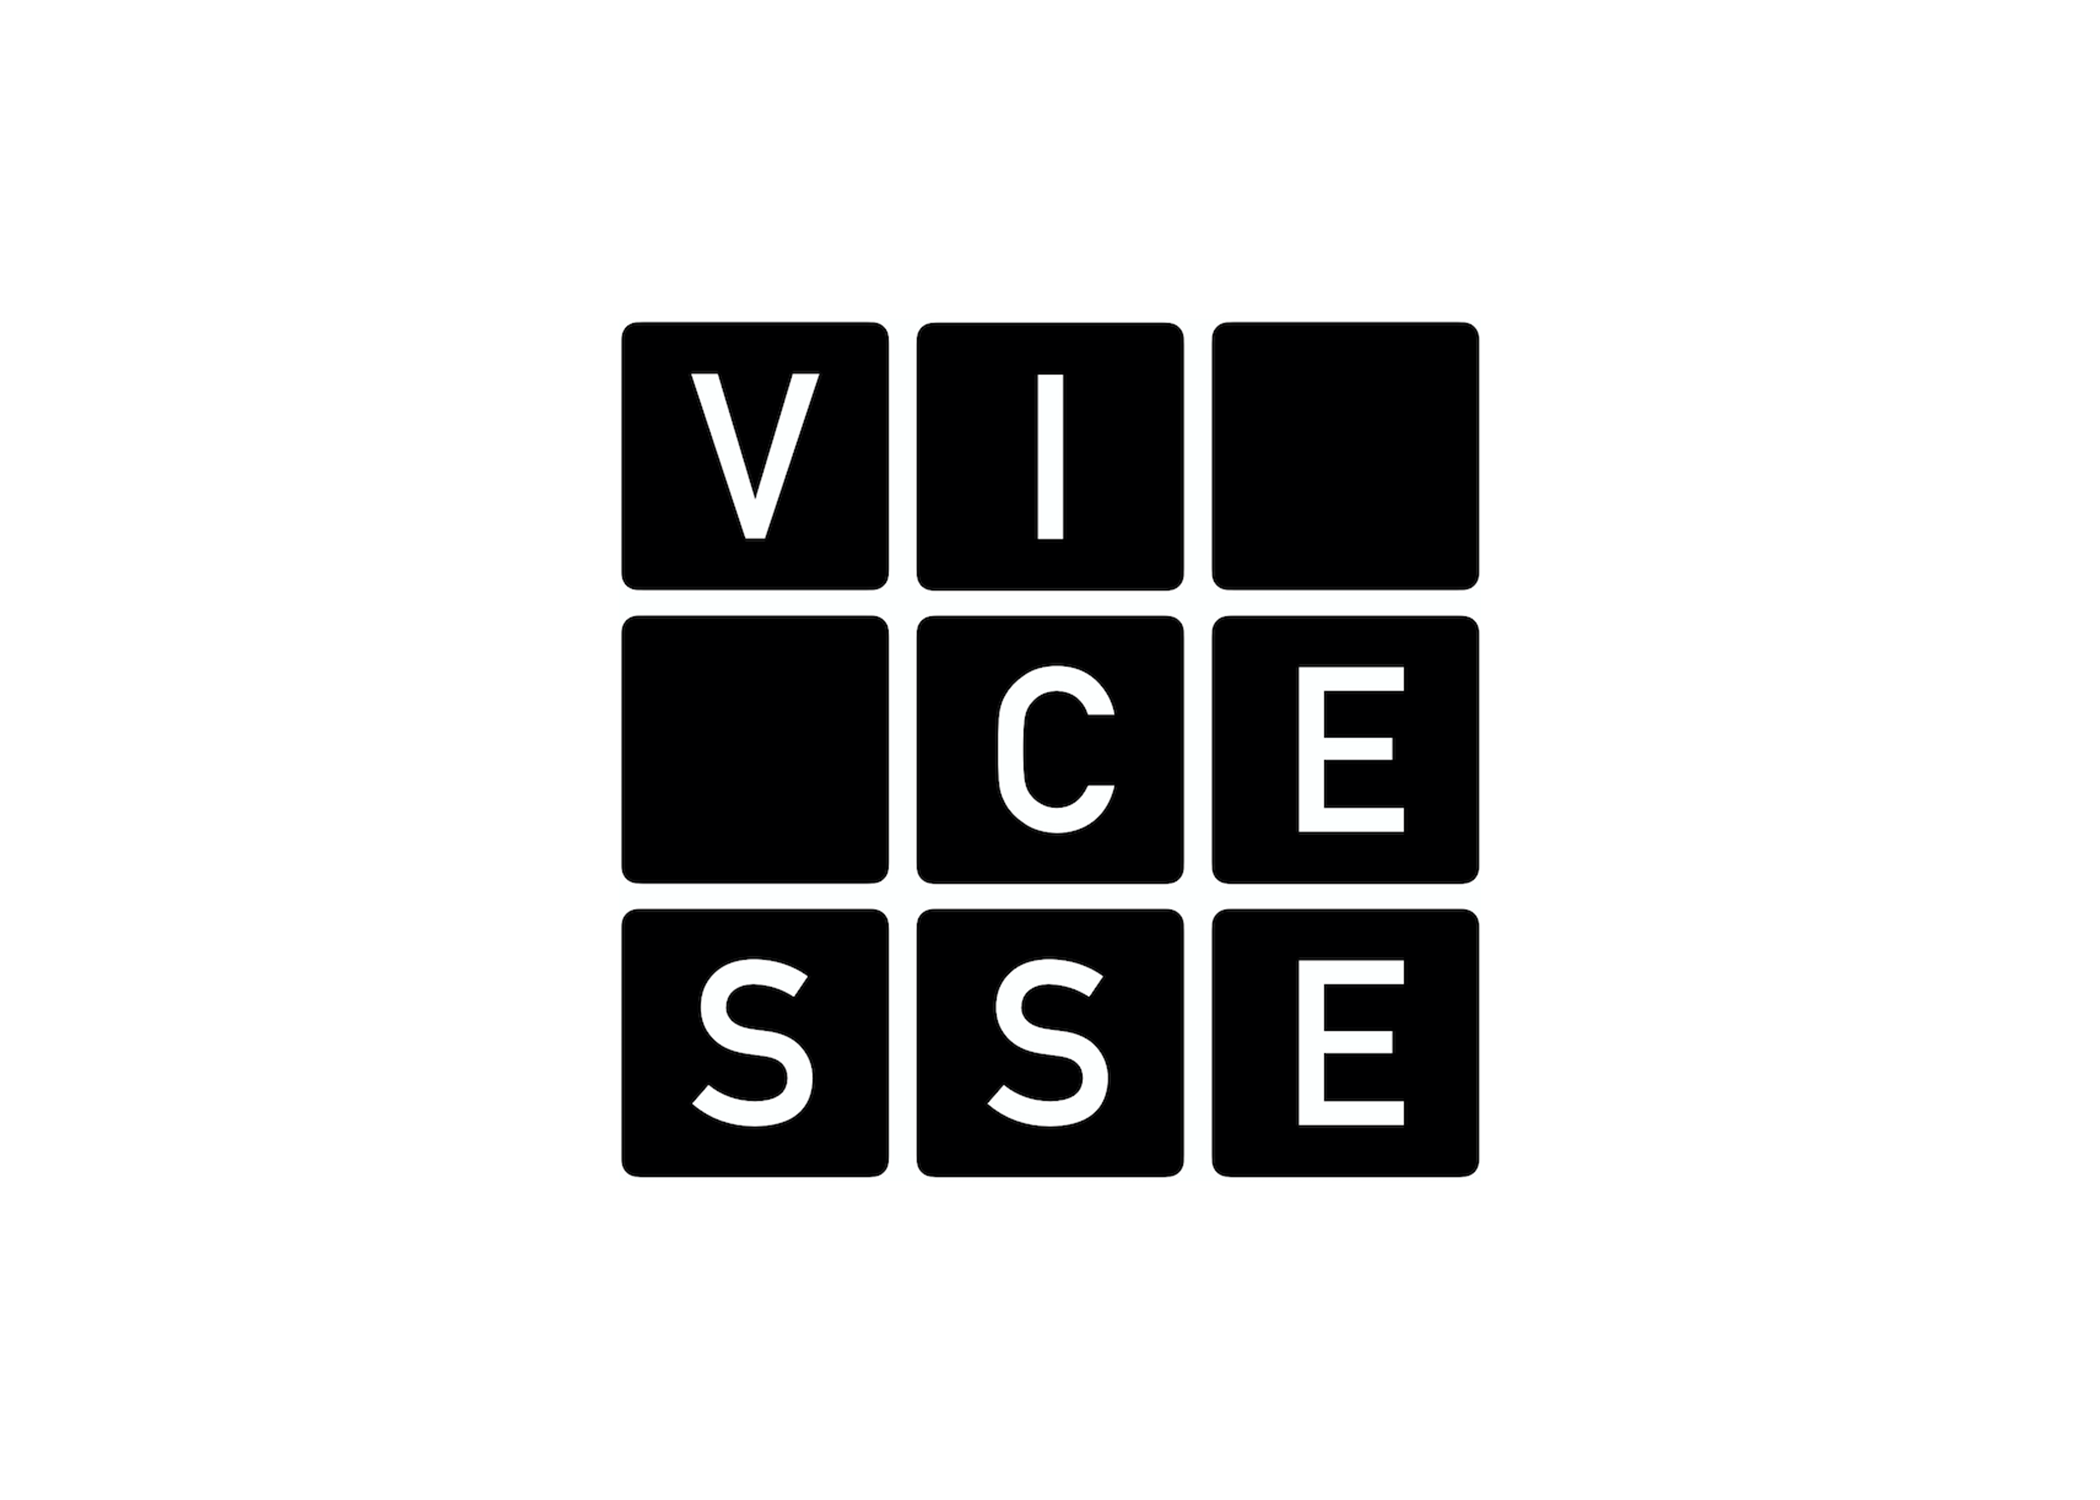 vicesse - Vienna Centre for Societal Security - logo